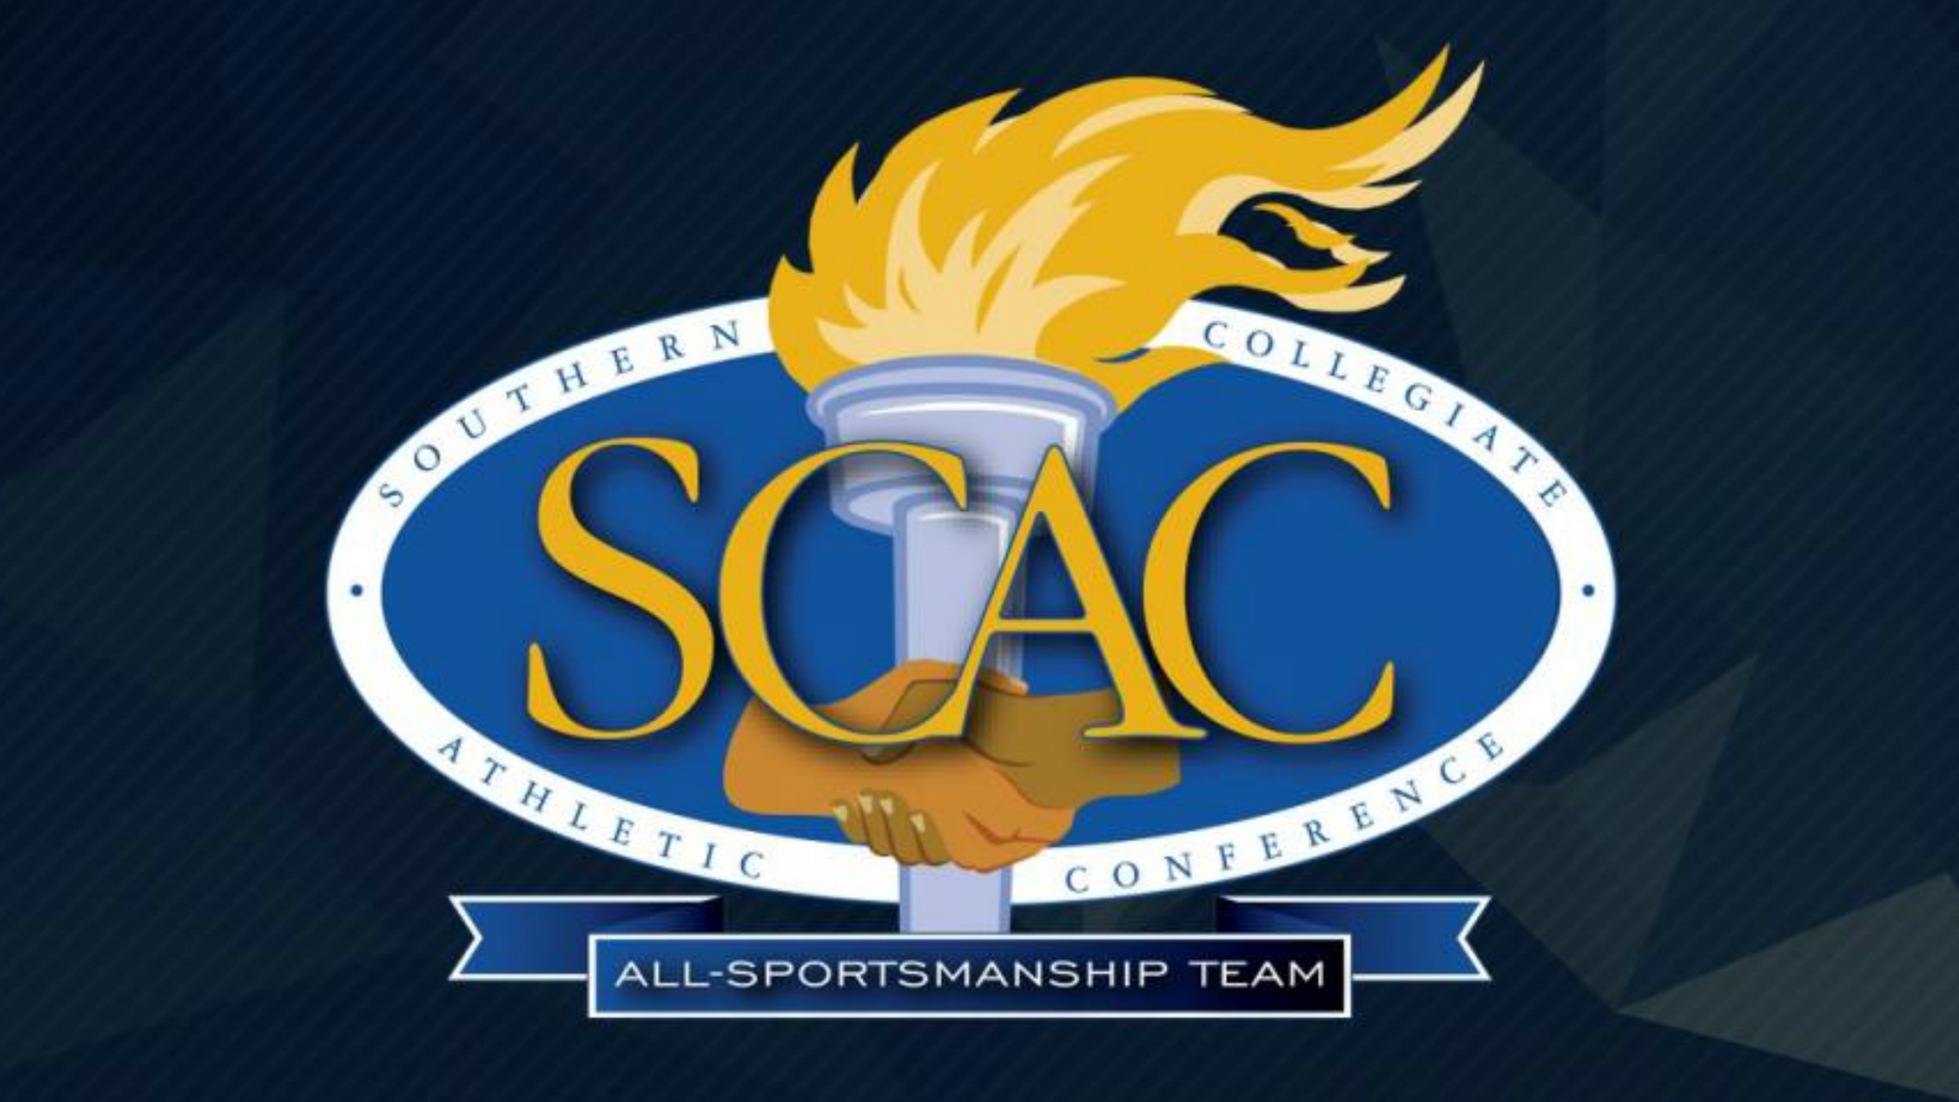 SCAC Announces 2019 Spring All-Sportsmanship Teams; Dallas Has 7 Named